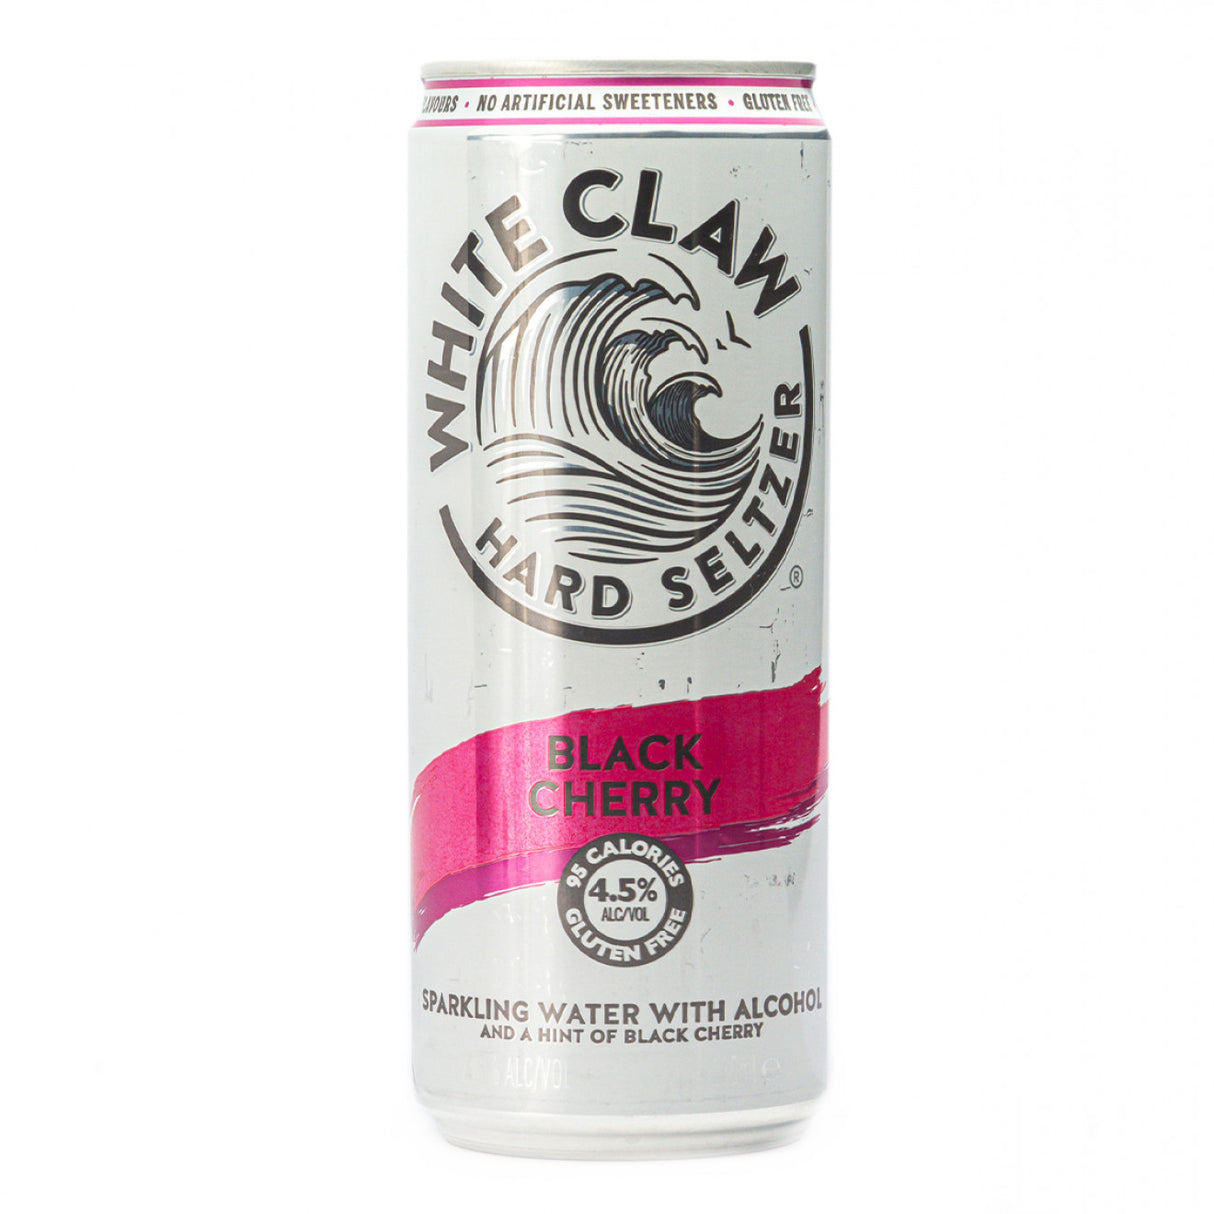 WHITE CLAW HARD SELTZER BLACK CHERRY CANS (330ml) x 12